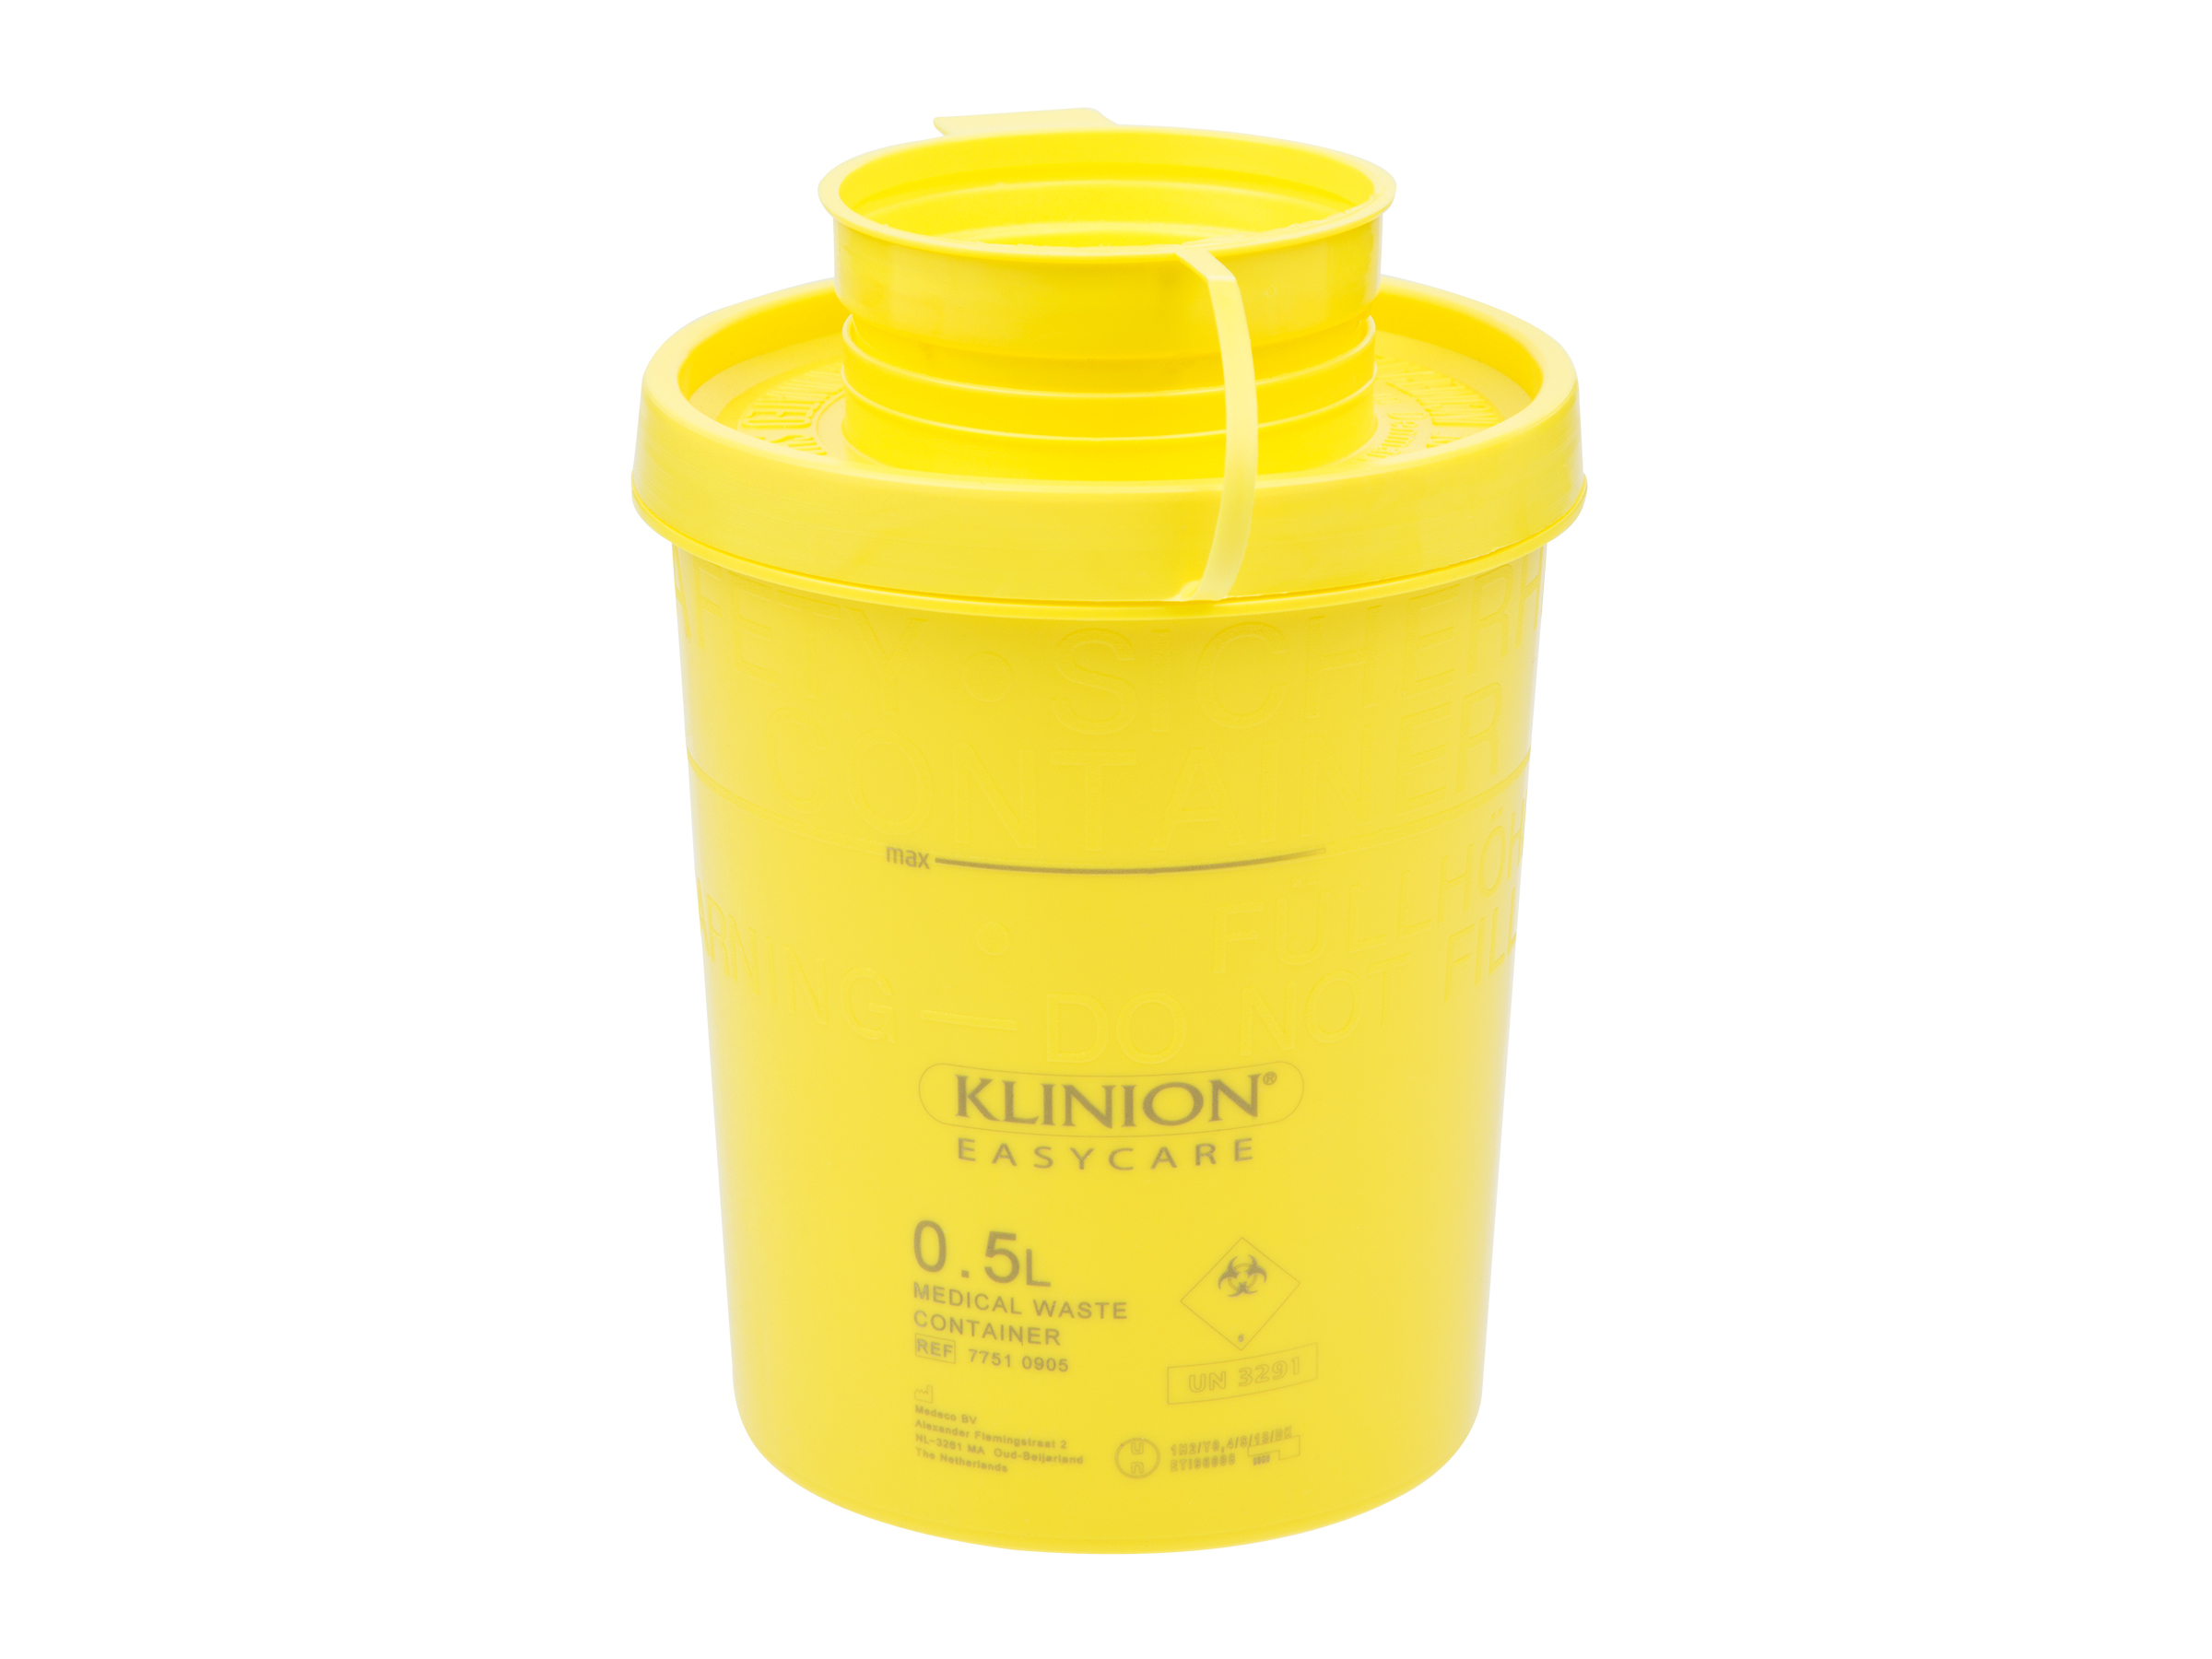 Klinion Easycare kanylebøtte, 0,5 liter, 1 stk.